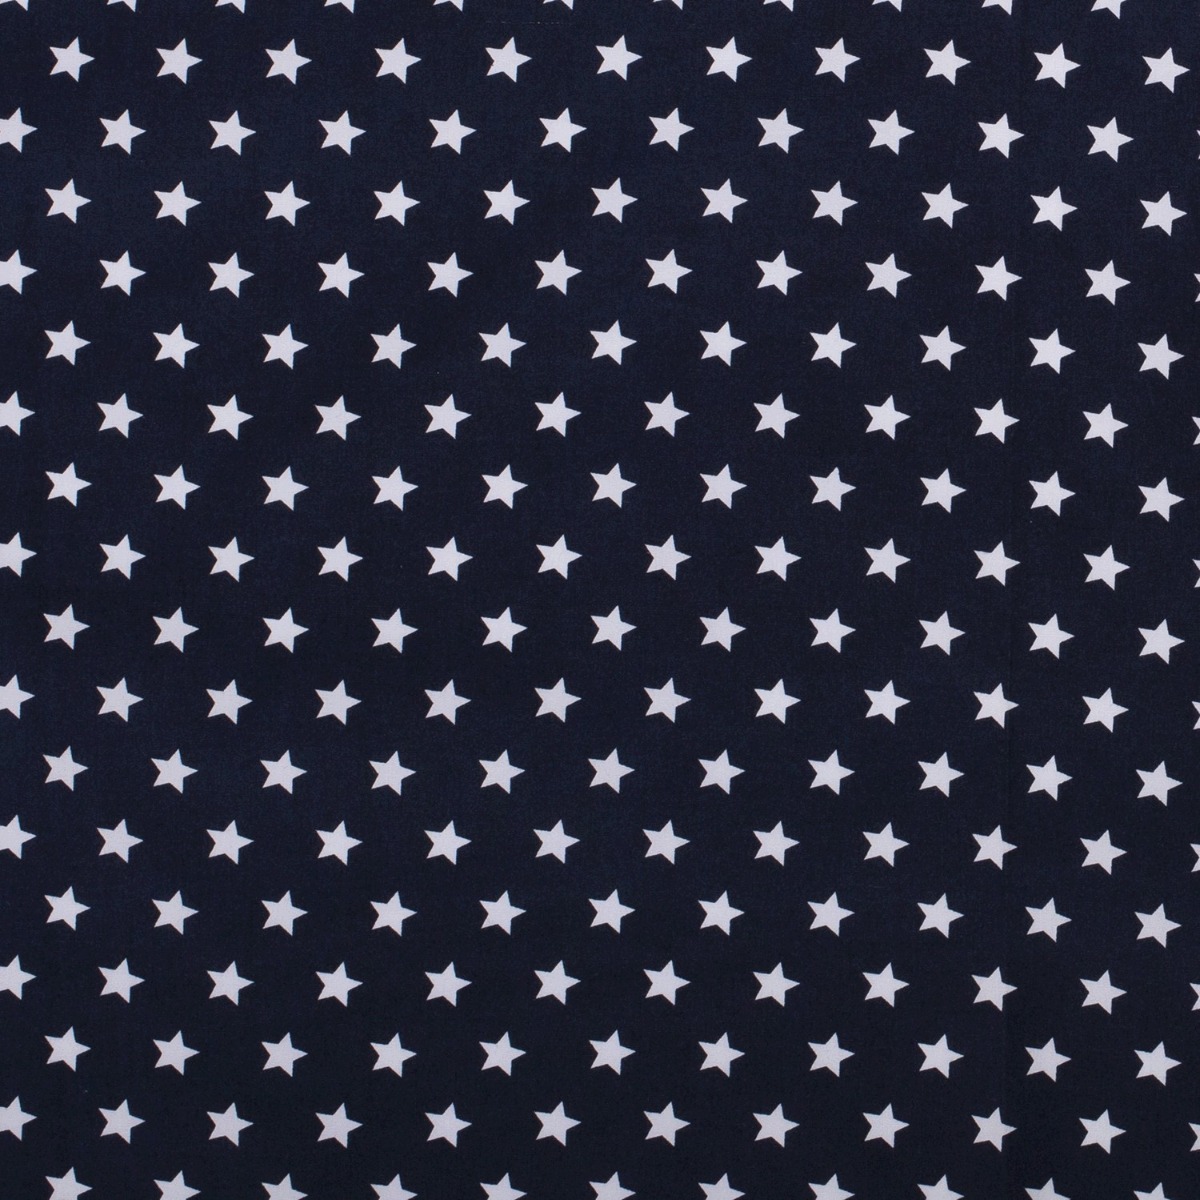 Baumwolle Sterne Standard Dunkelblau 